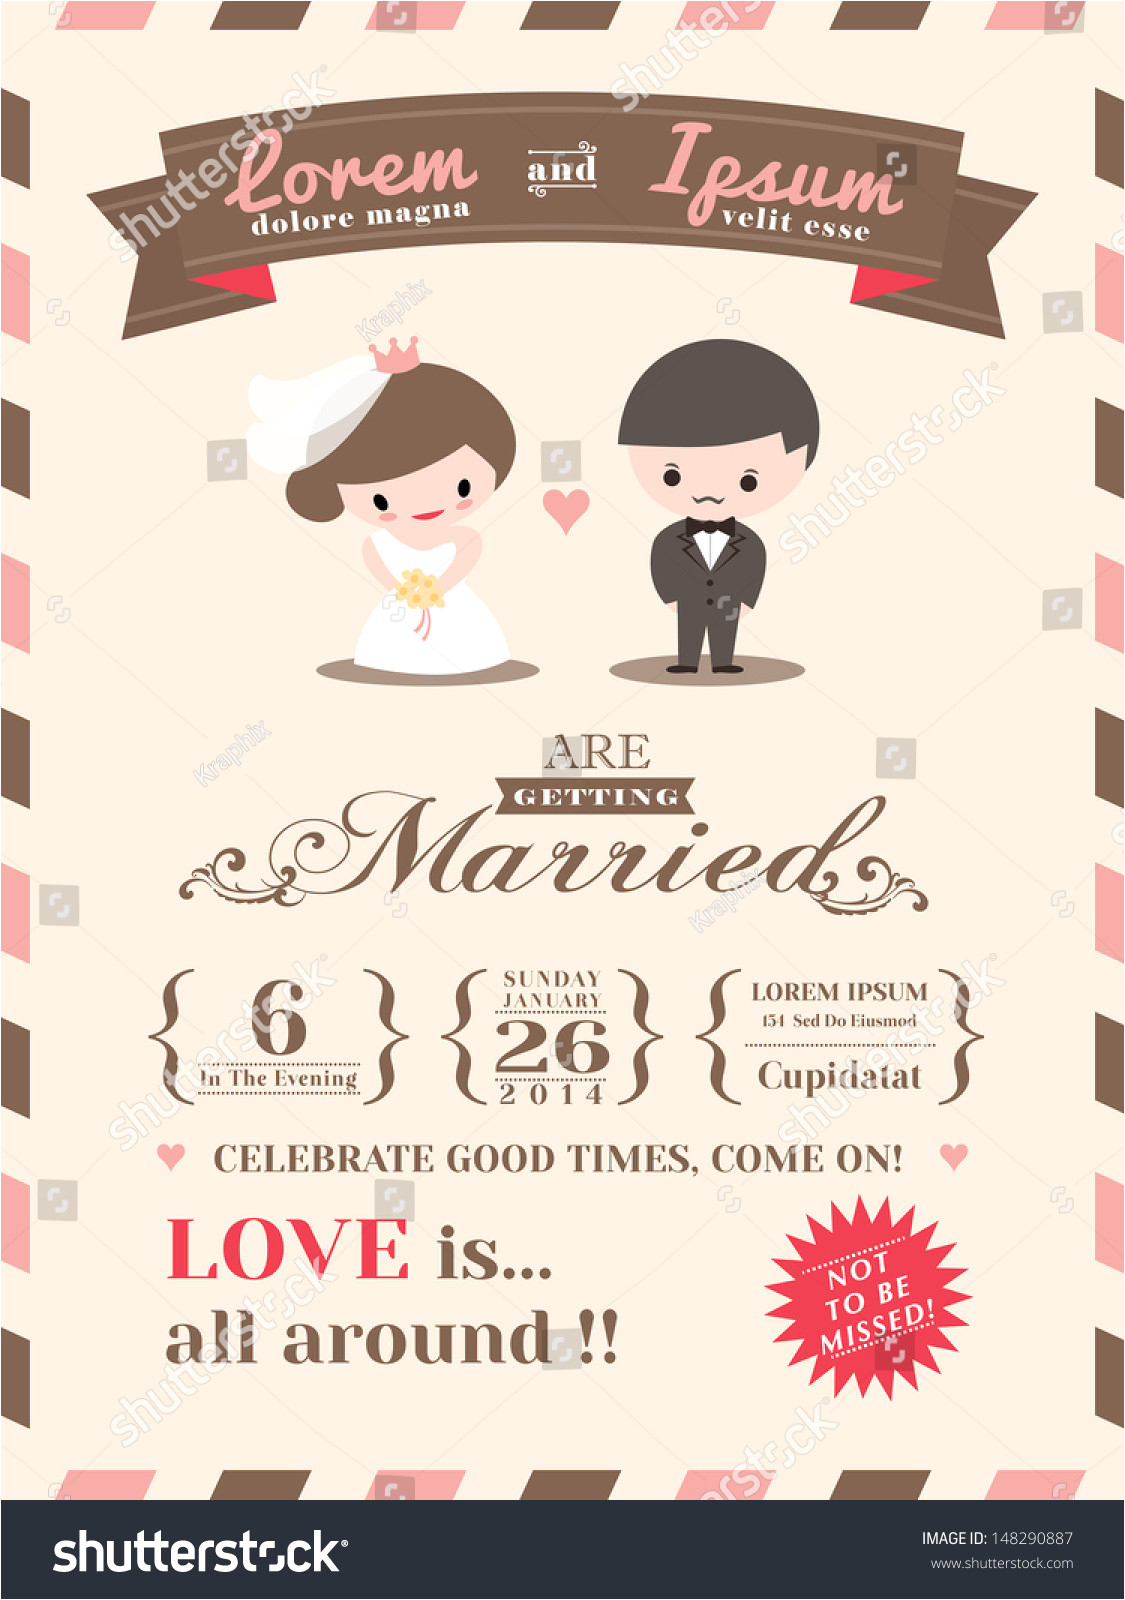 stock vector wedding invitation card template with cute groom and bride cartoon